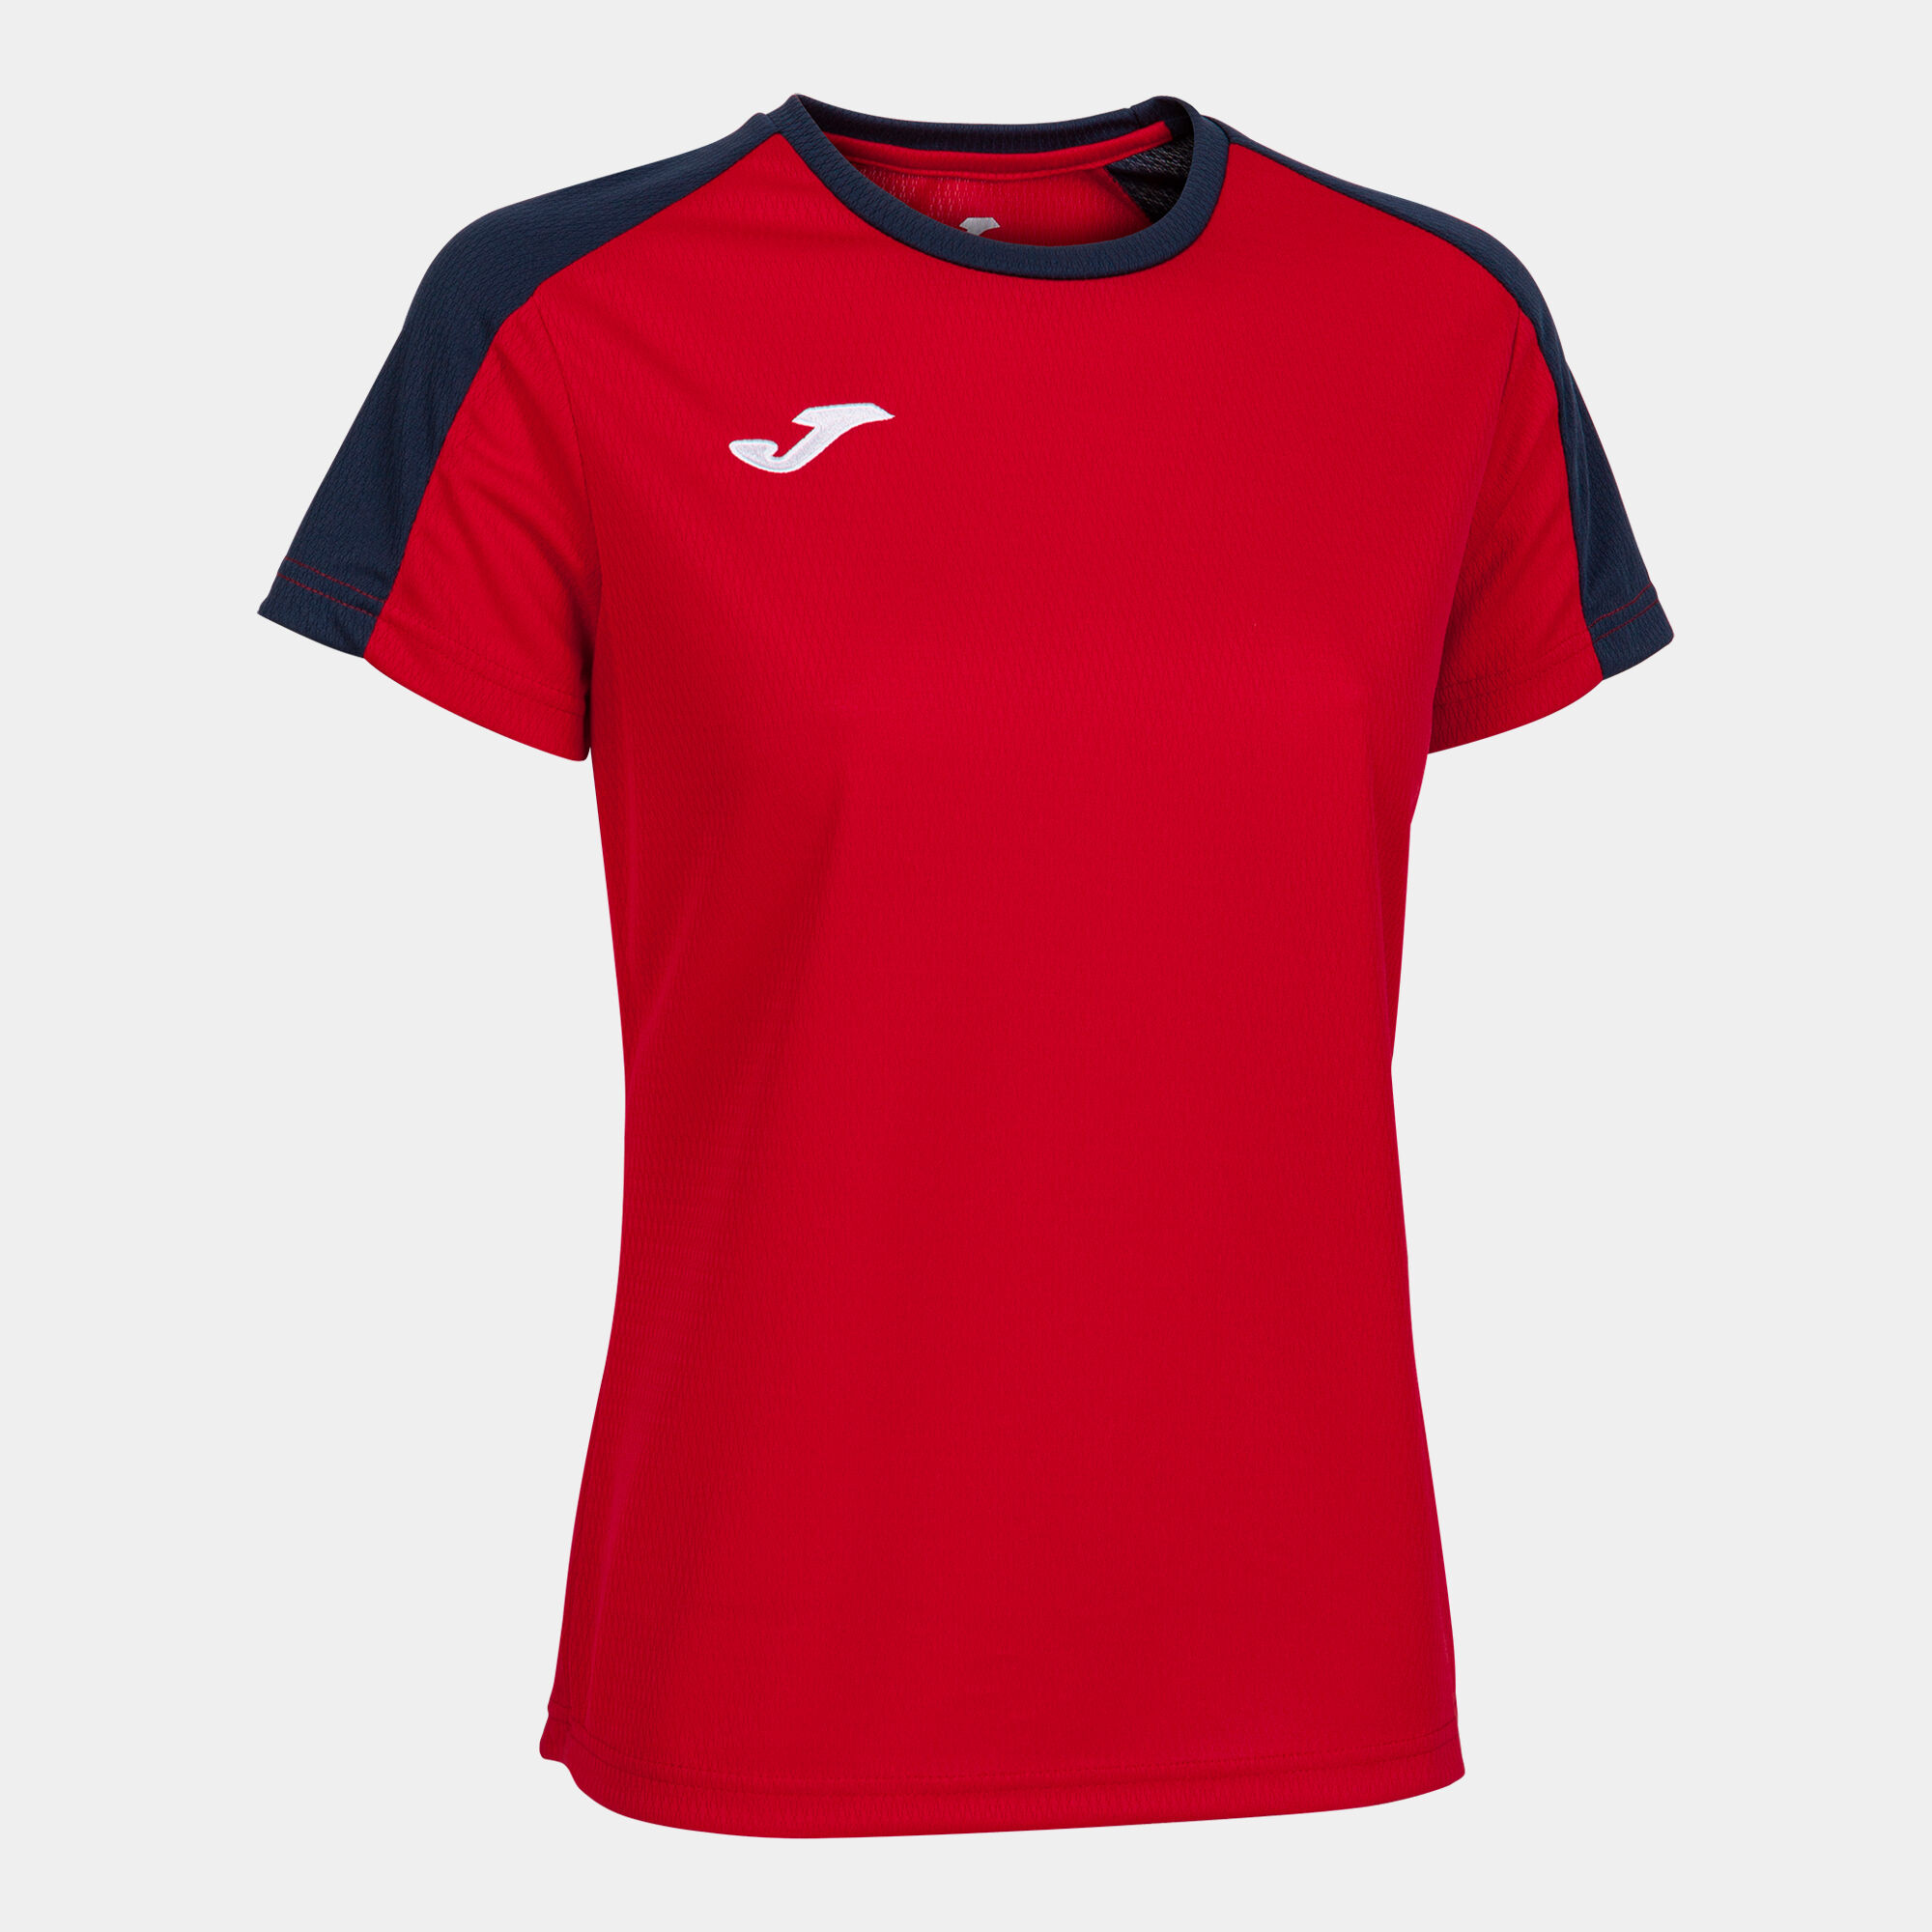 T-shirt manga curta mulher Eco Championship vermelho azul marinho